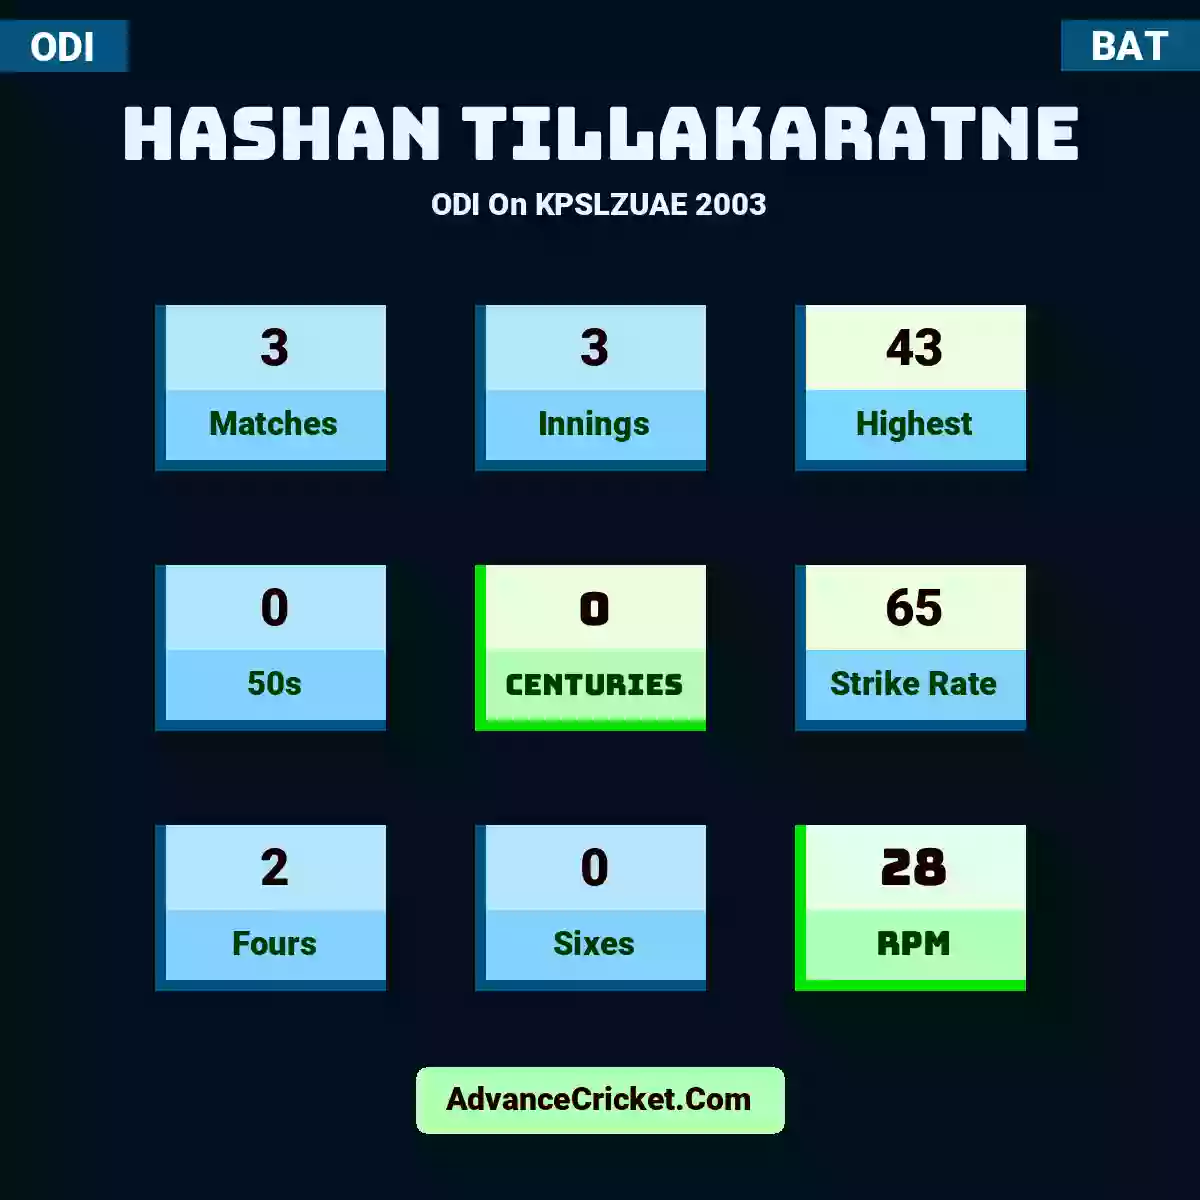 Hashan Tillakaratne ODI  On KPSLZUAE 2003, Hashan Tillakaratne played 3 matches, scored 43 runs as highest, 0 half-centuries, and 0 centuries, with a strike rate of 65. H.Tillakaratne hit 2 fours and 0 sixes, with an RPM of 28.